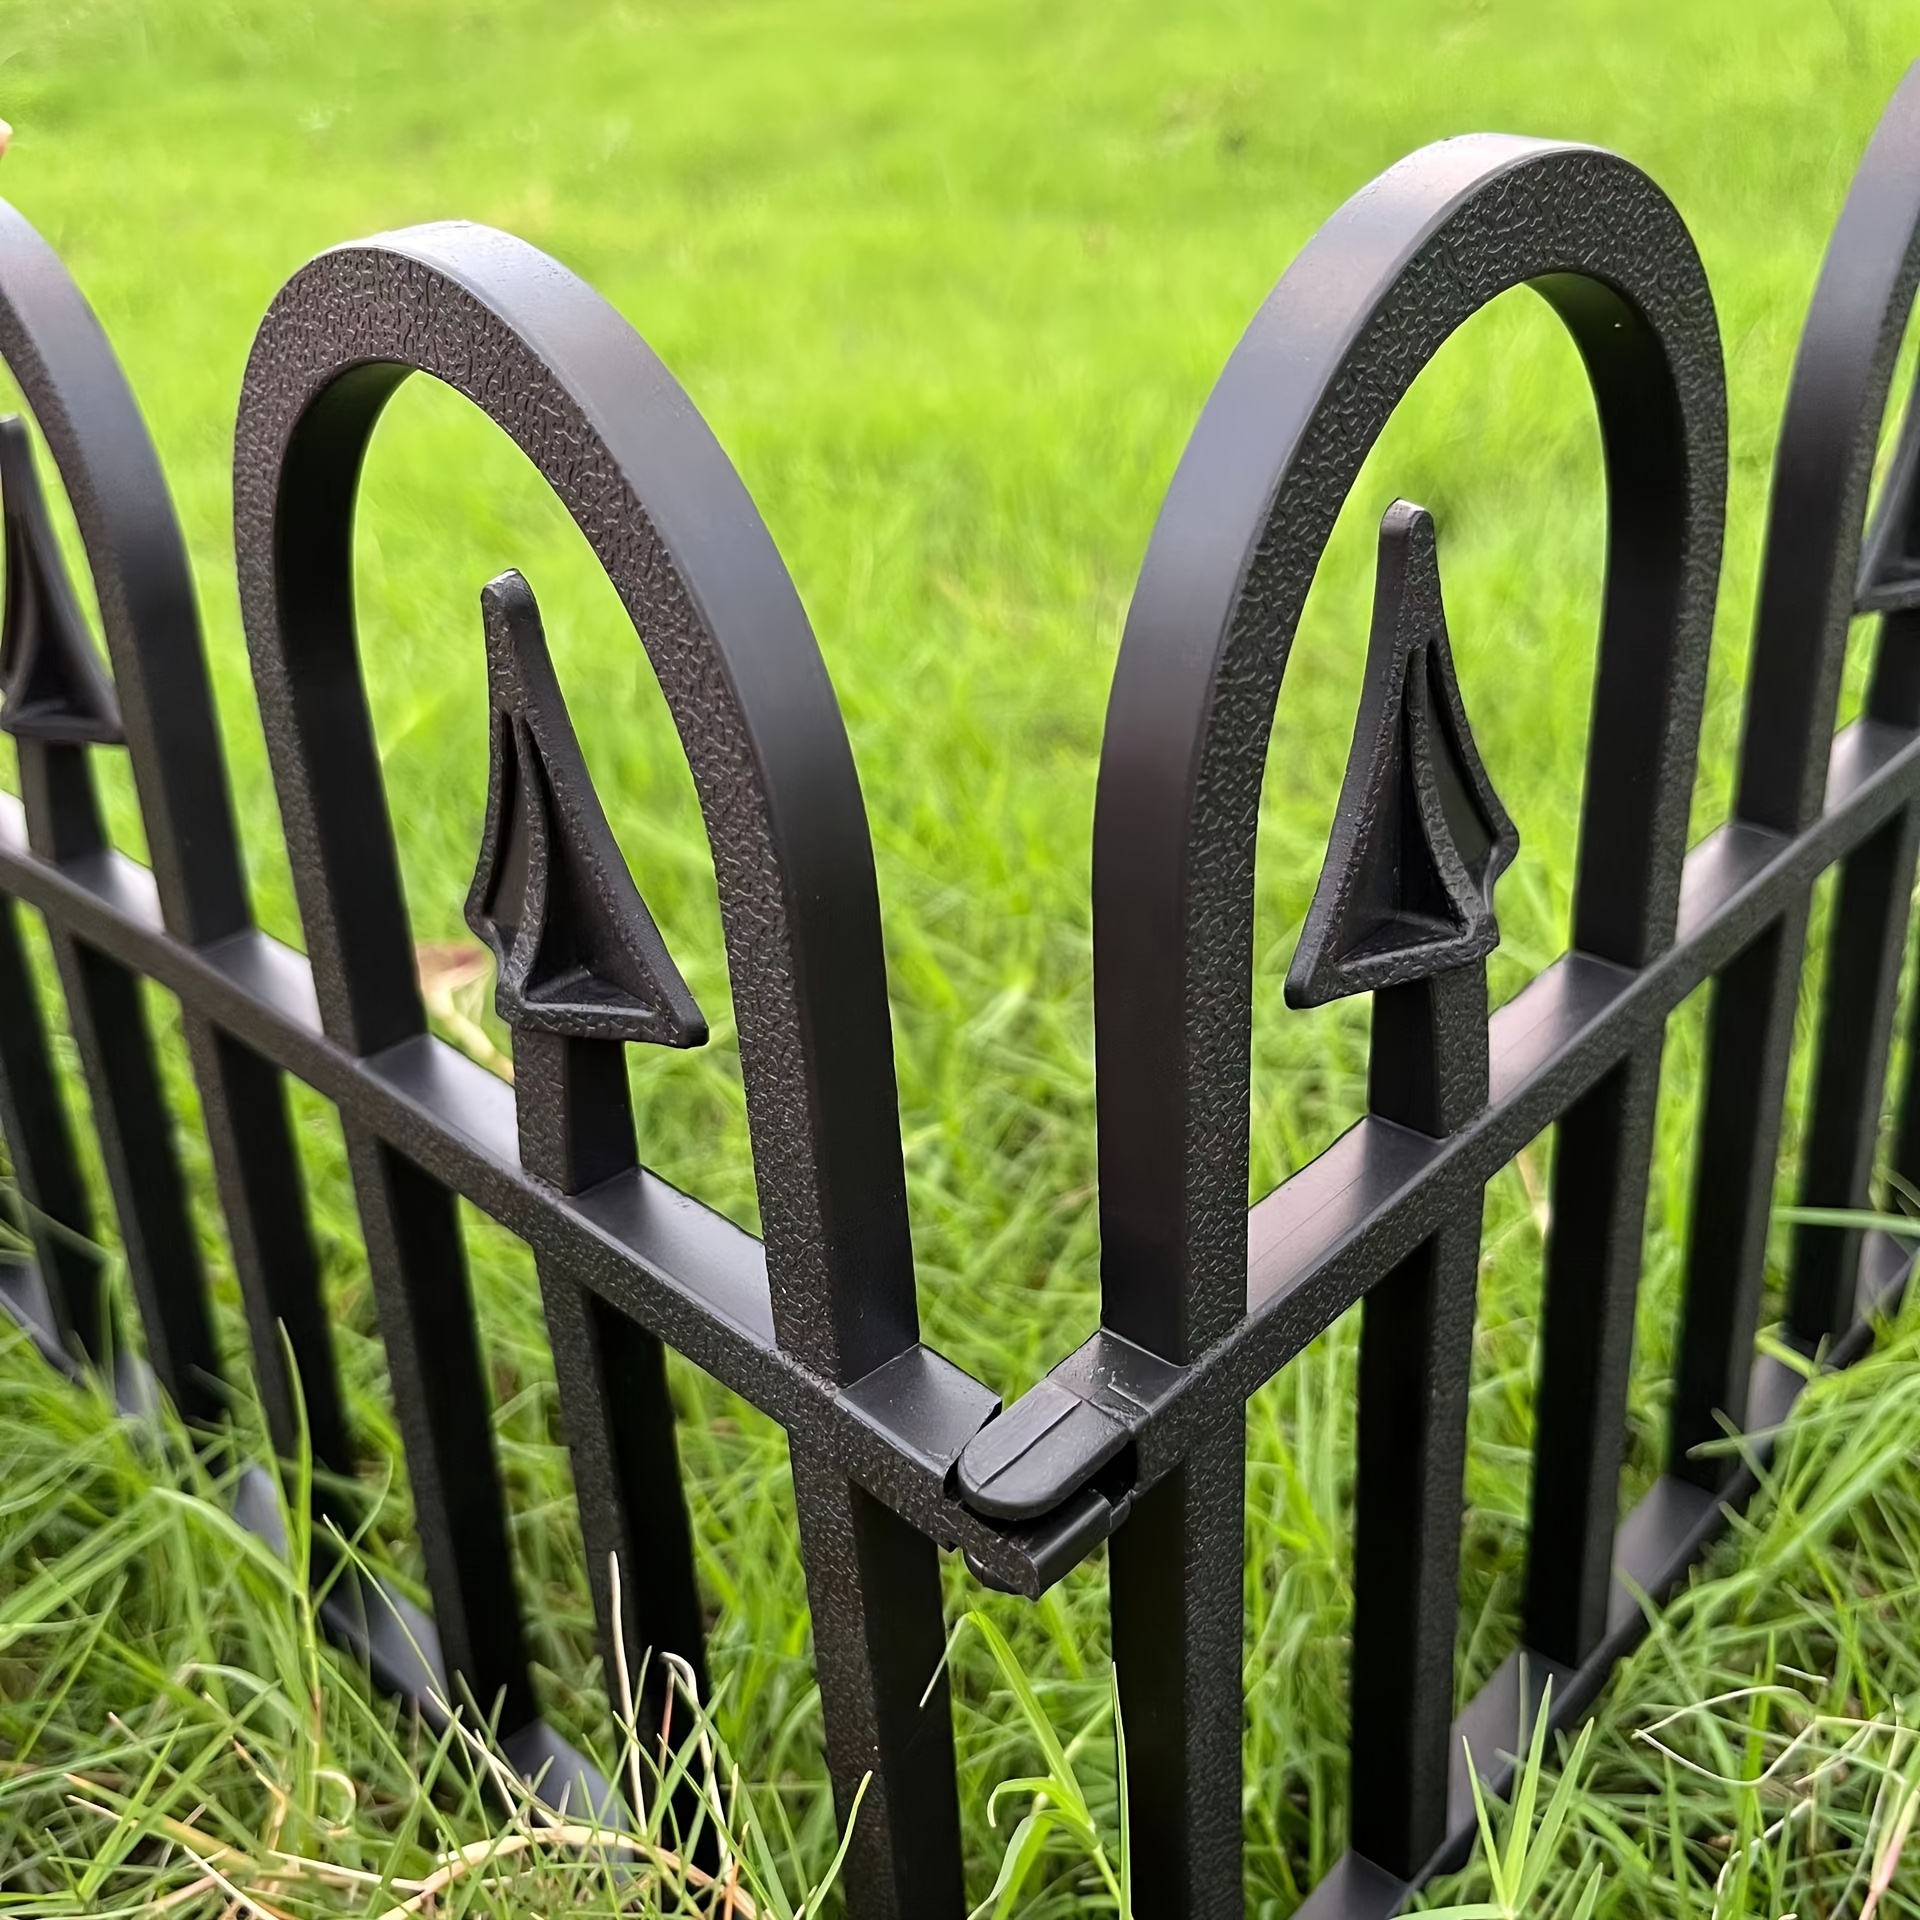 

4-piece Black Arrow Fence - Detachable, Durable Plastic Garden Edging For Yard & Patio Decor